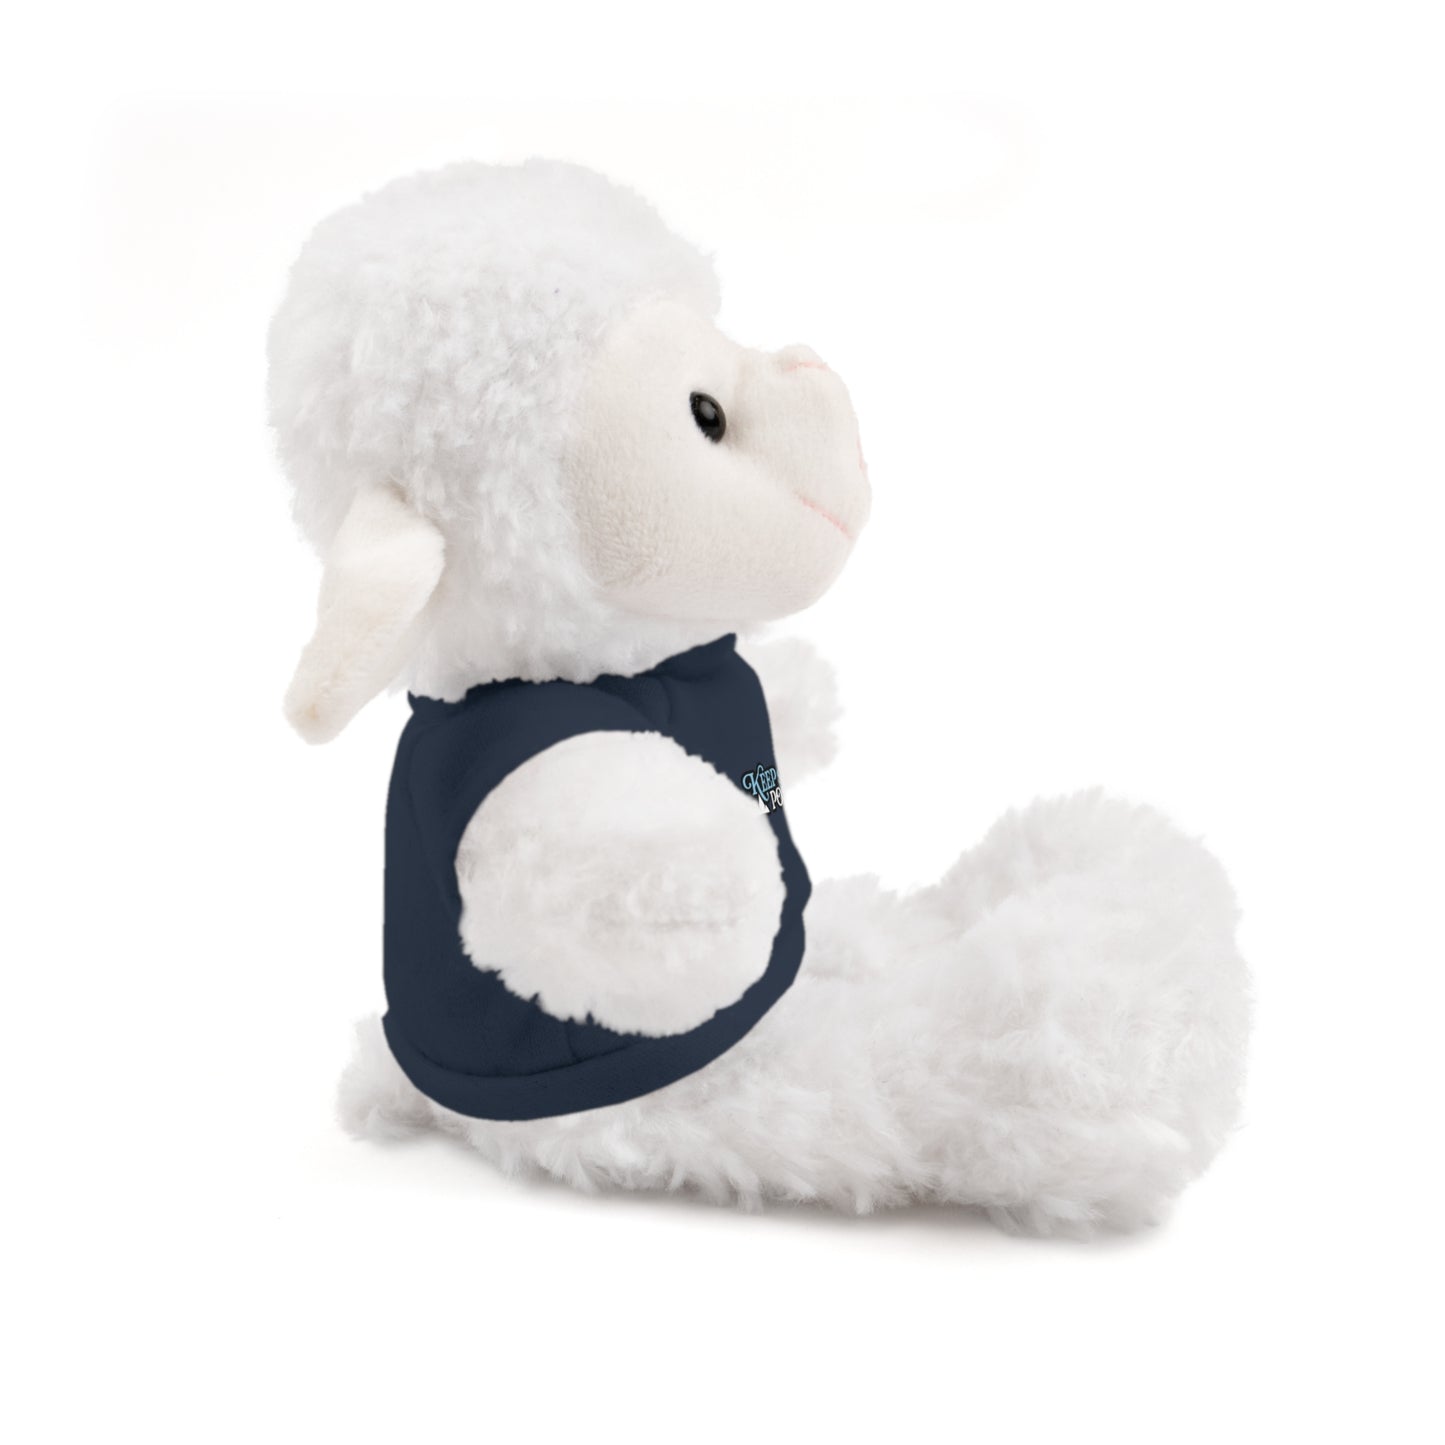 IceMan Keep Spreading Positivity Stuffed Animals with Tee